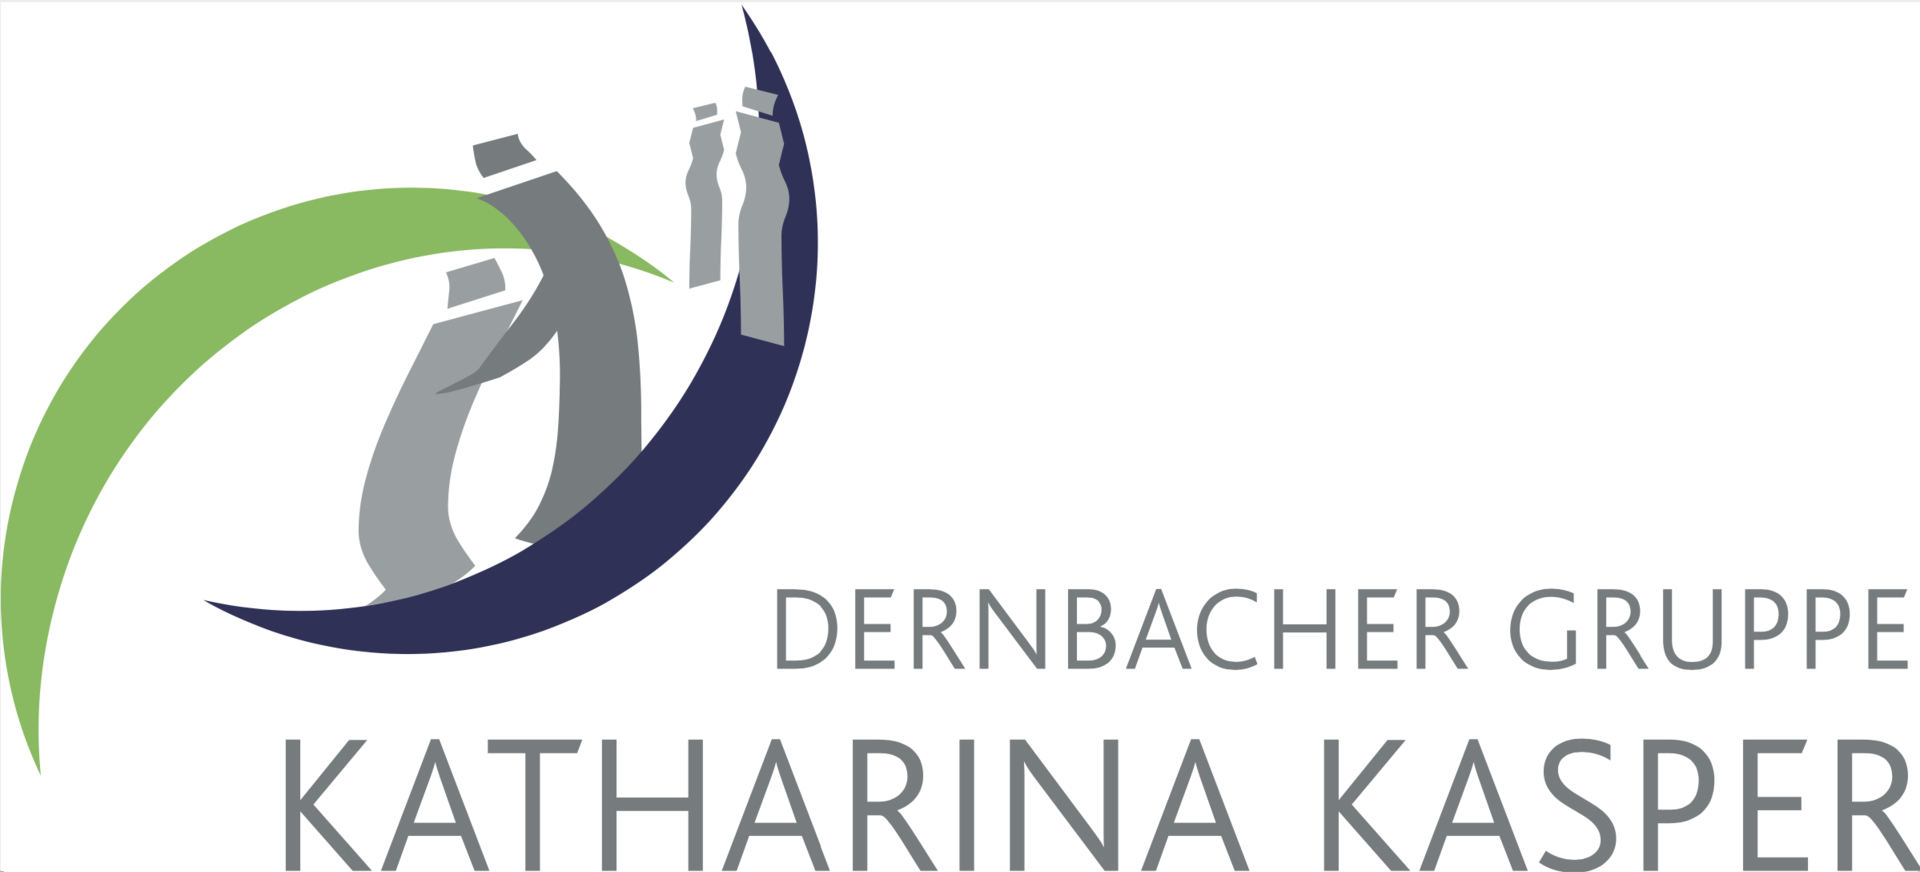 Logo der Dernbacher Gruppe Katharina Kaspar